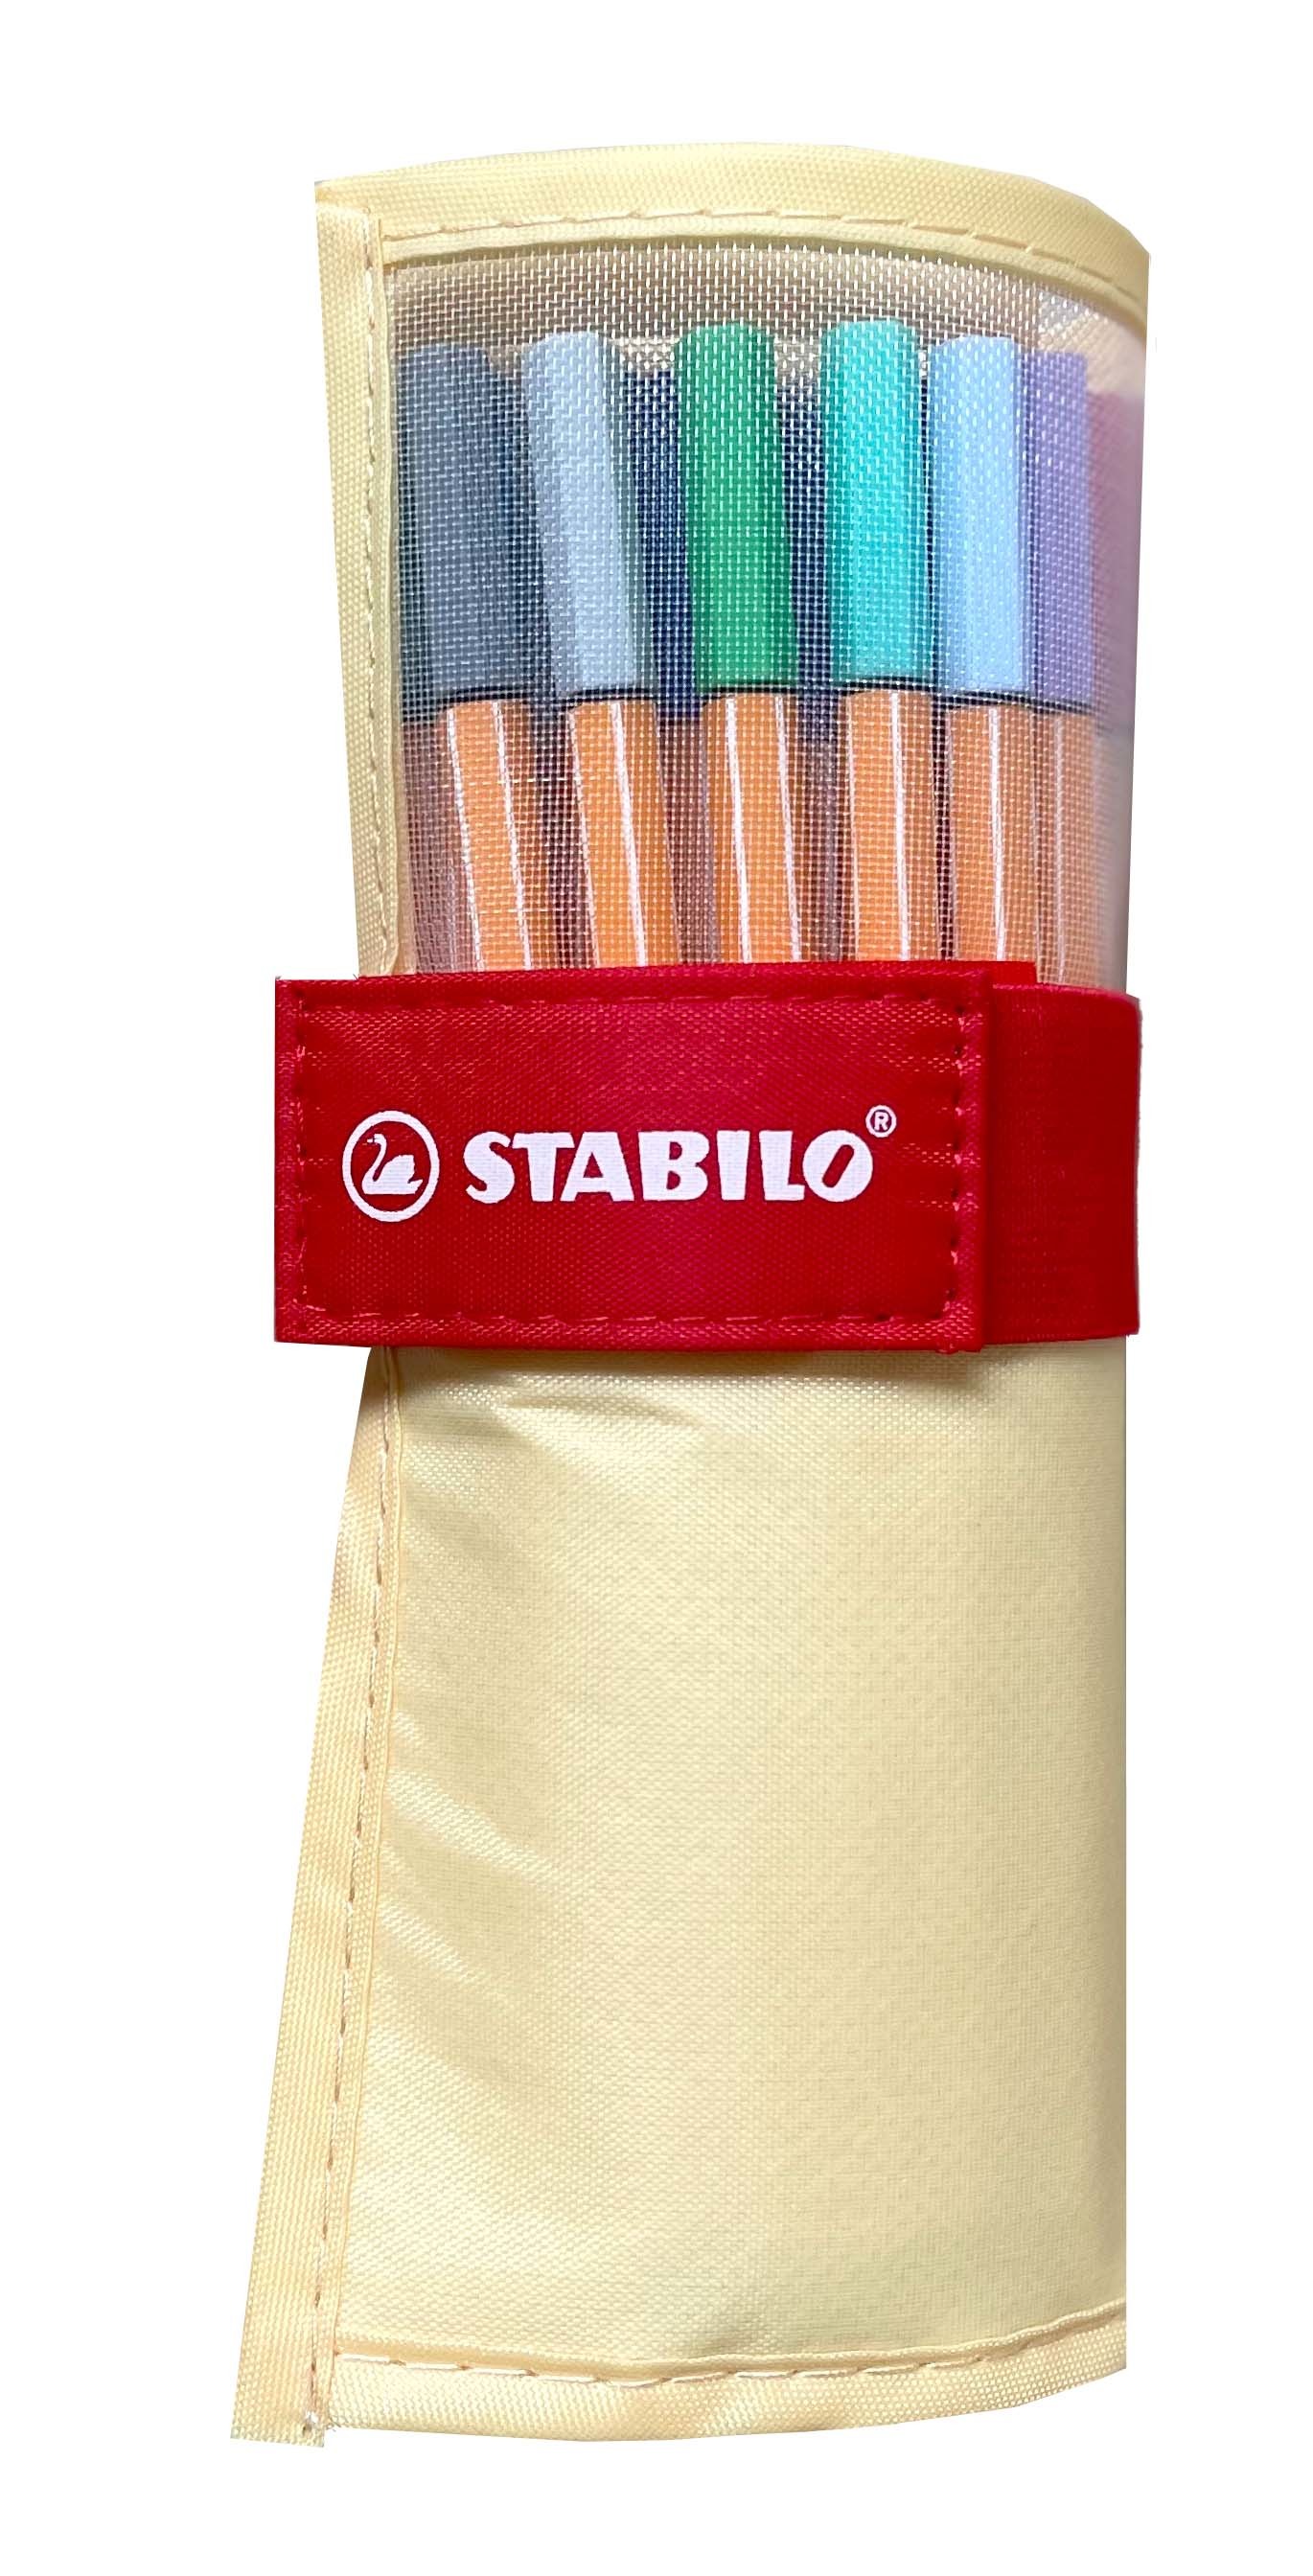 STABILO Rollerset point 88 0.4mm 8825-08-02CH 25 couleurs ass. jaune pastel